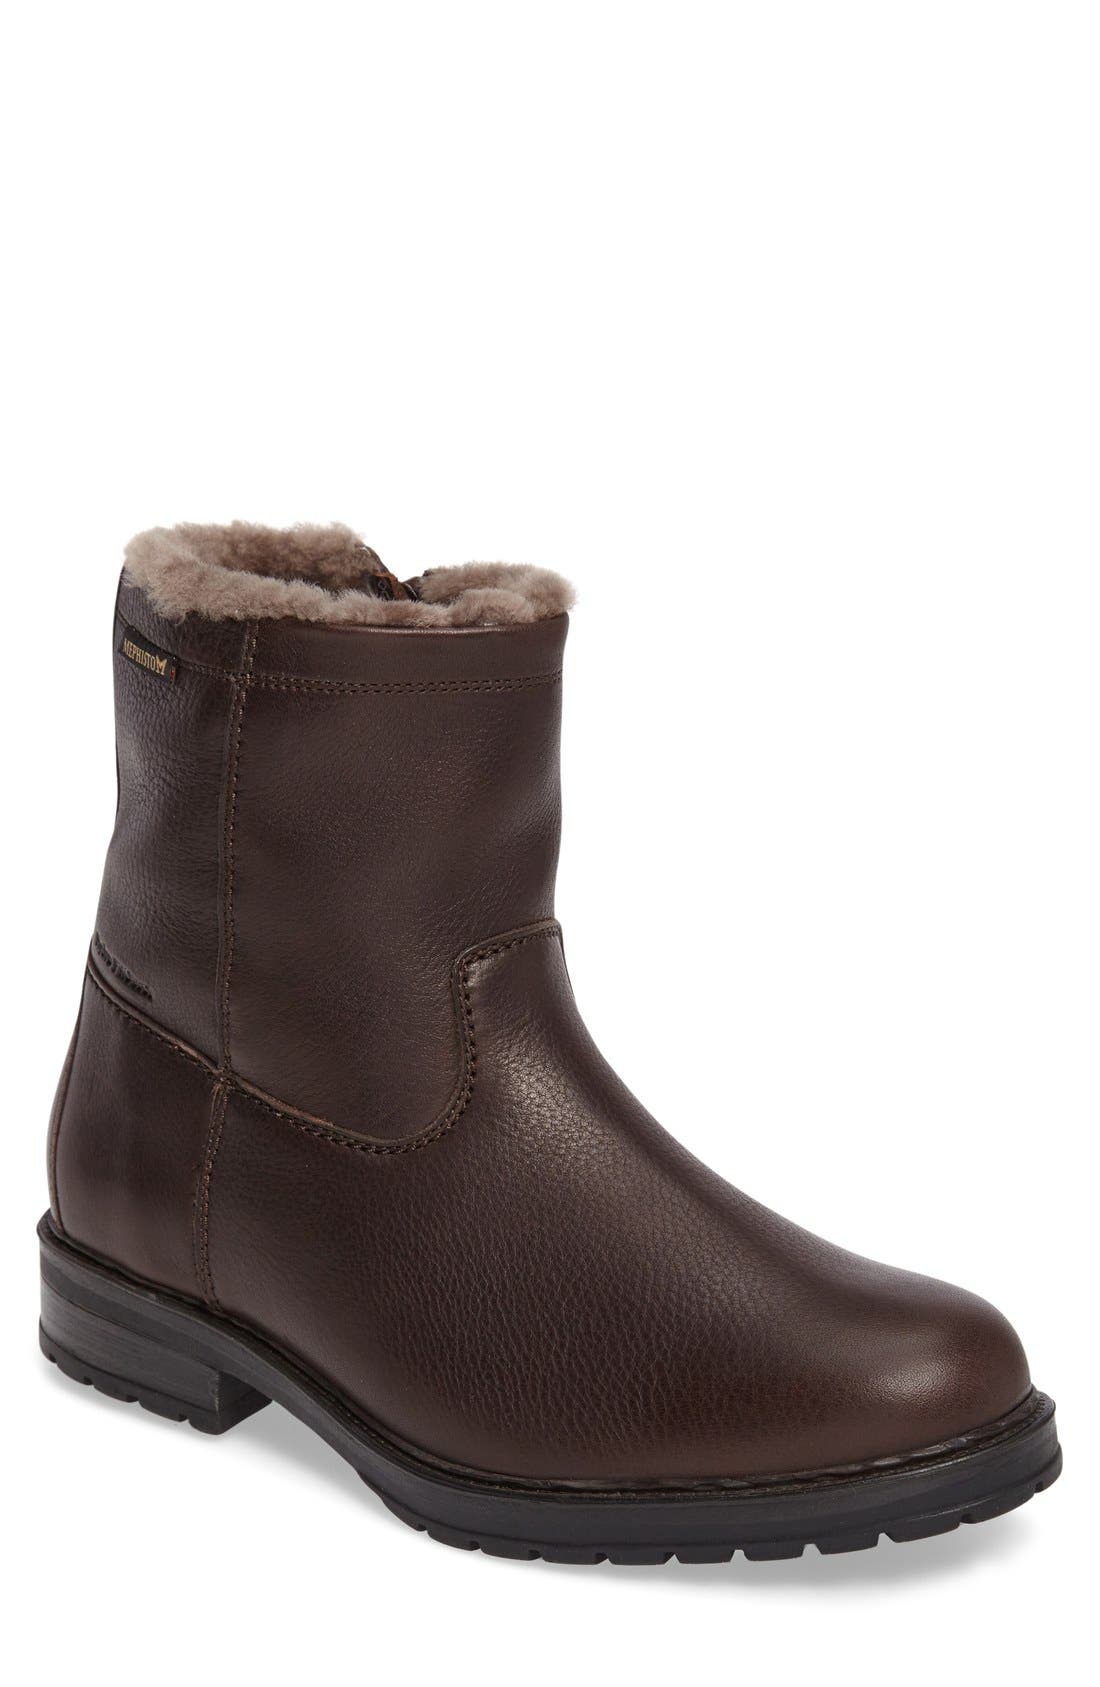 mephisto winter boots